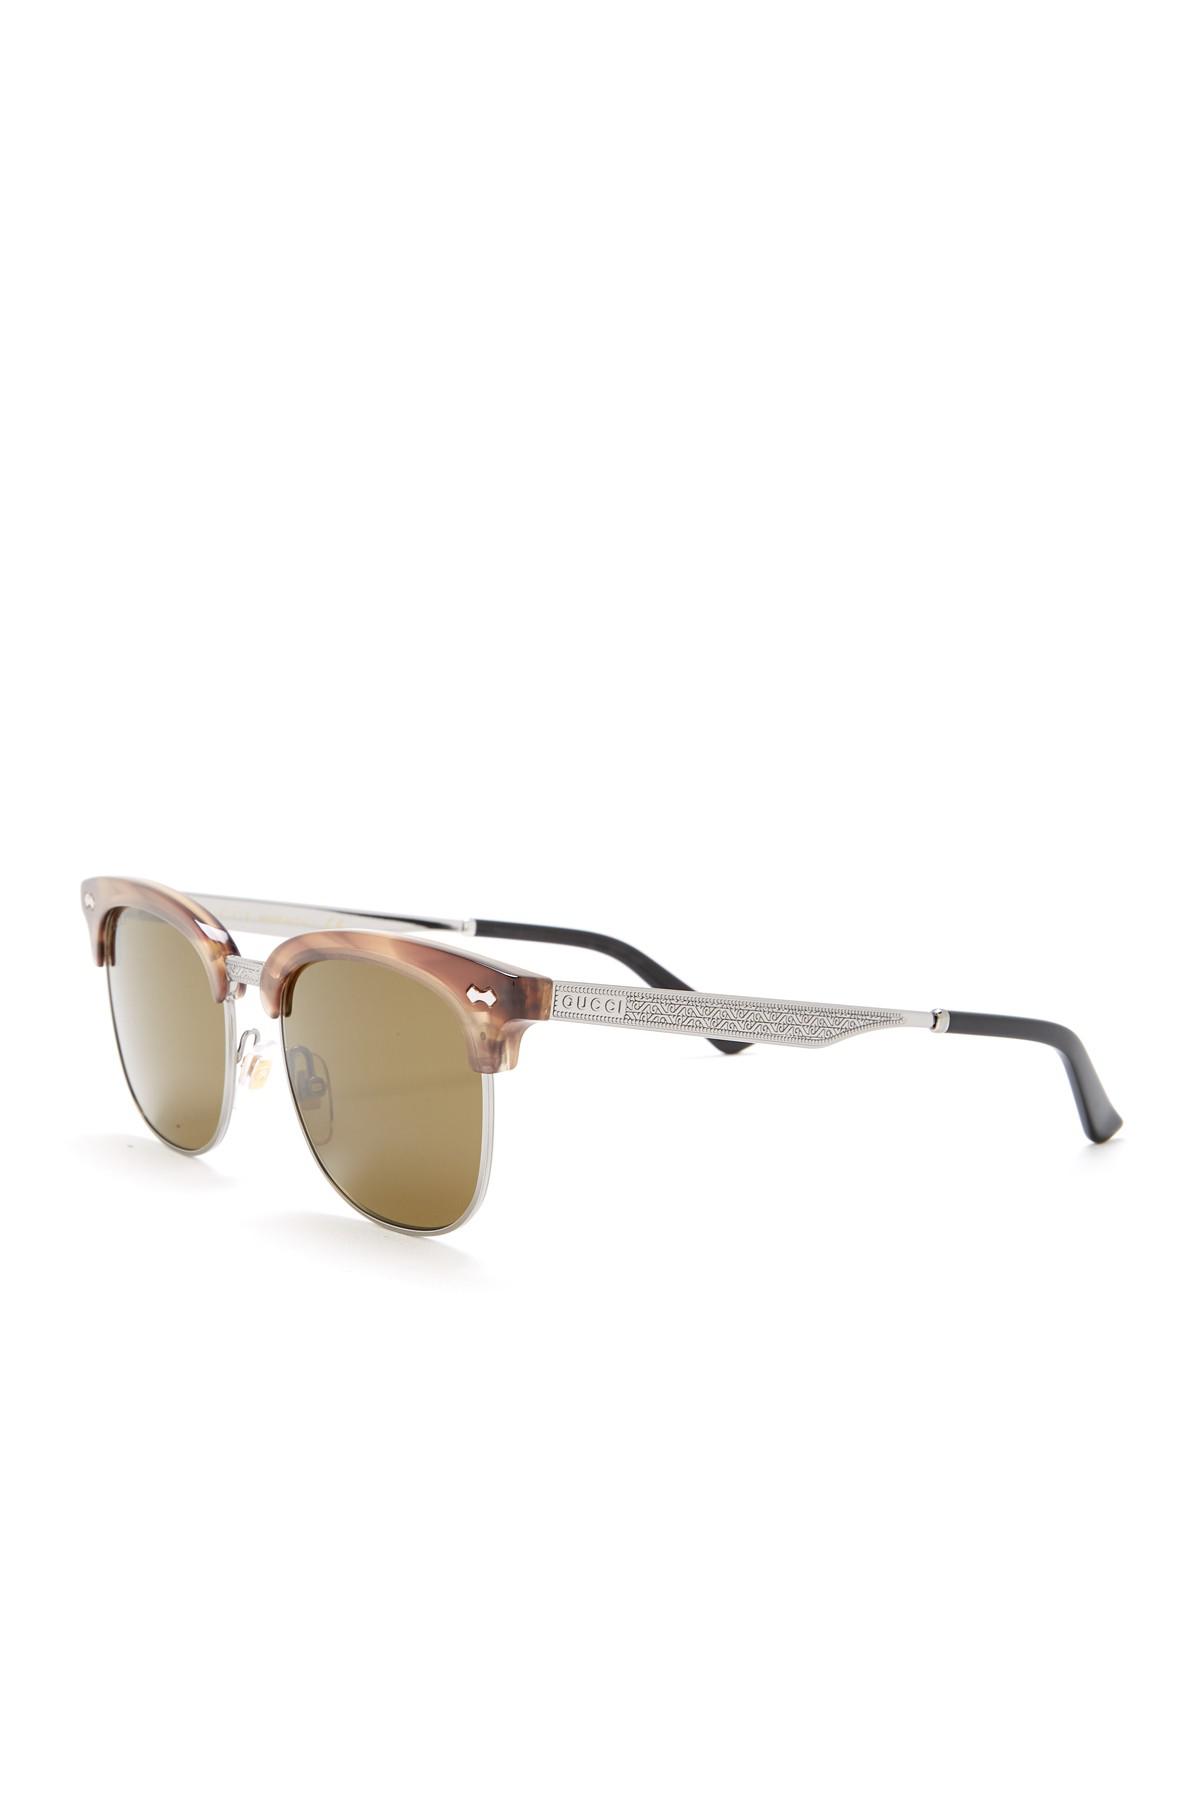 Gucci 52mm Clubmaster Sunglasses for 